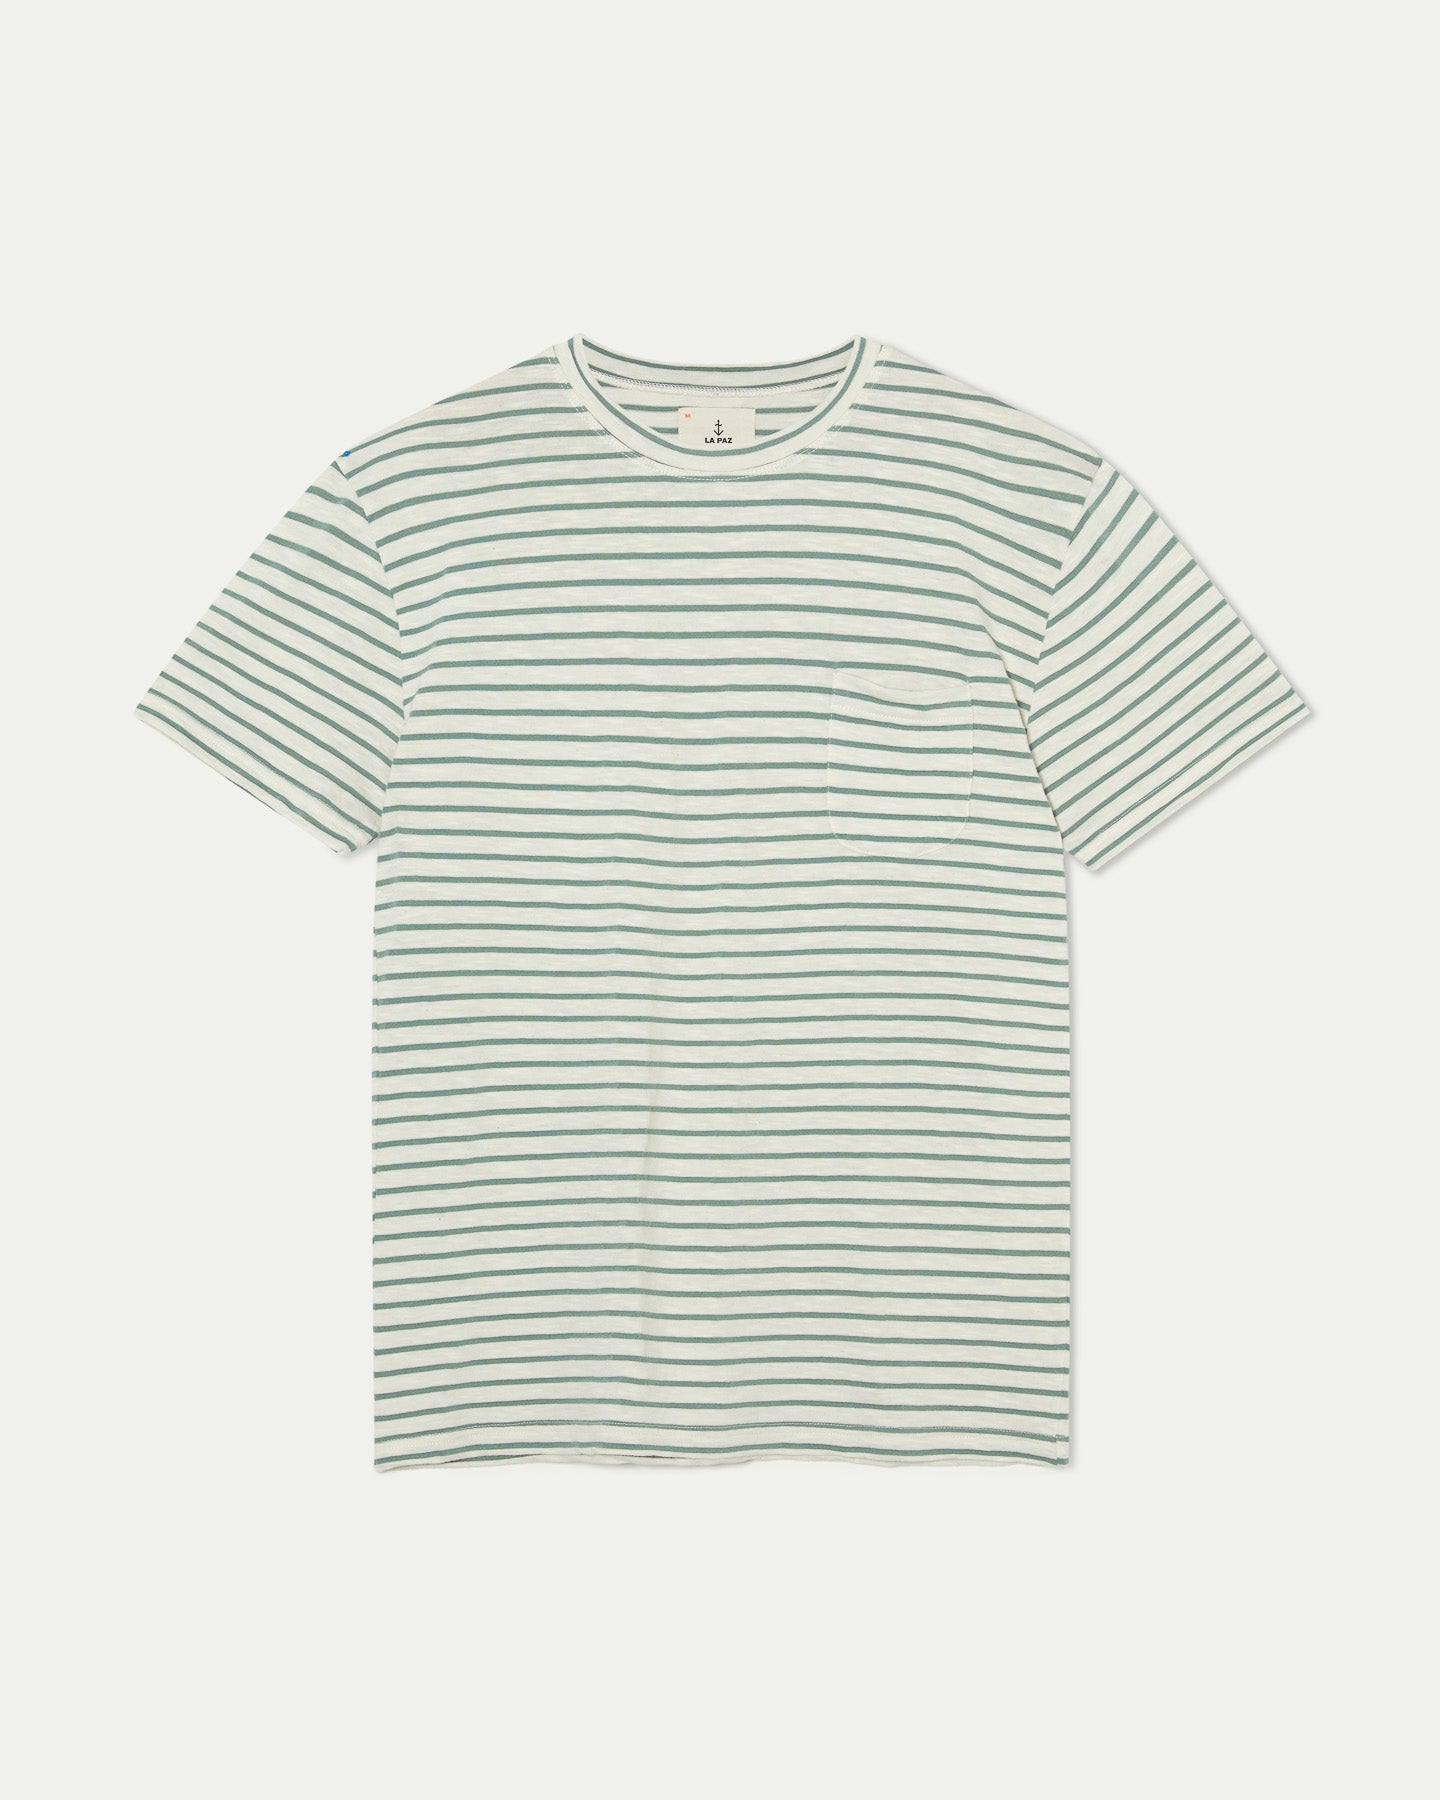 Guerreiro Green Bay Stripes T Shirt